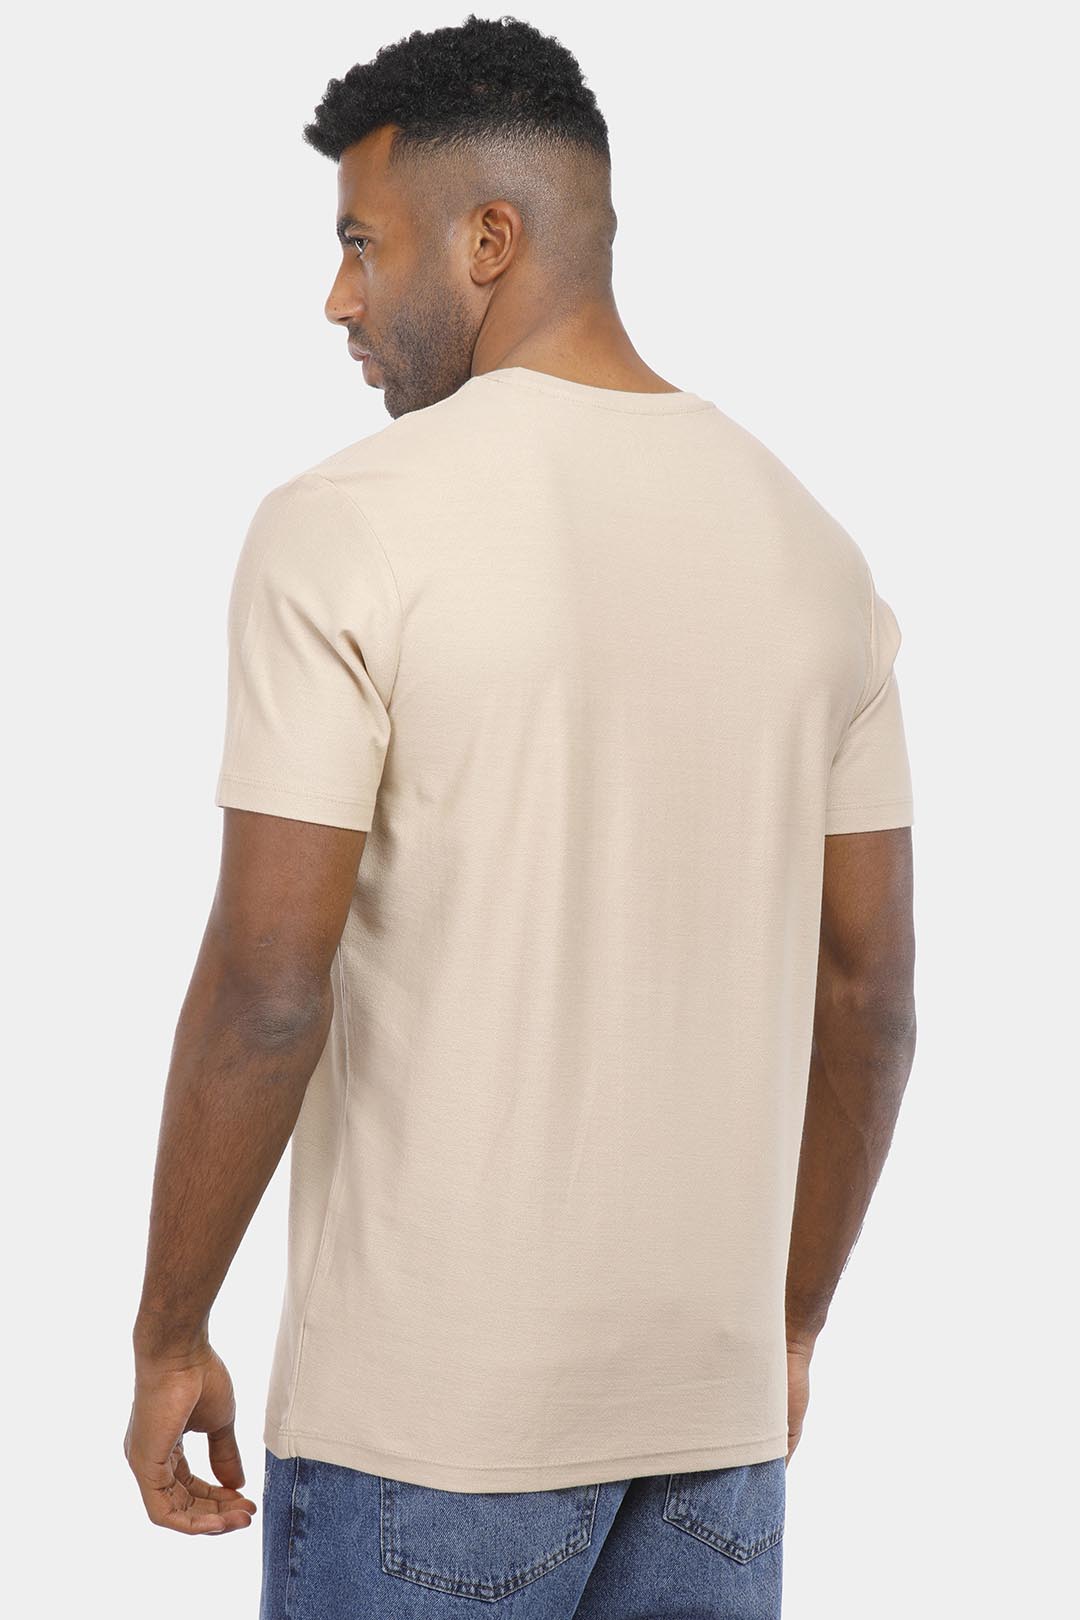 t-shirt beige 002/S24/M202211